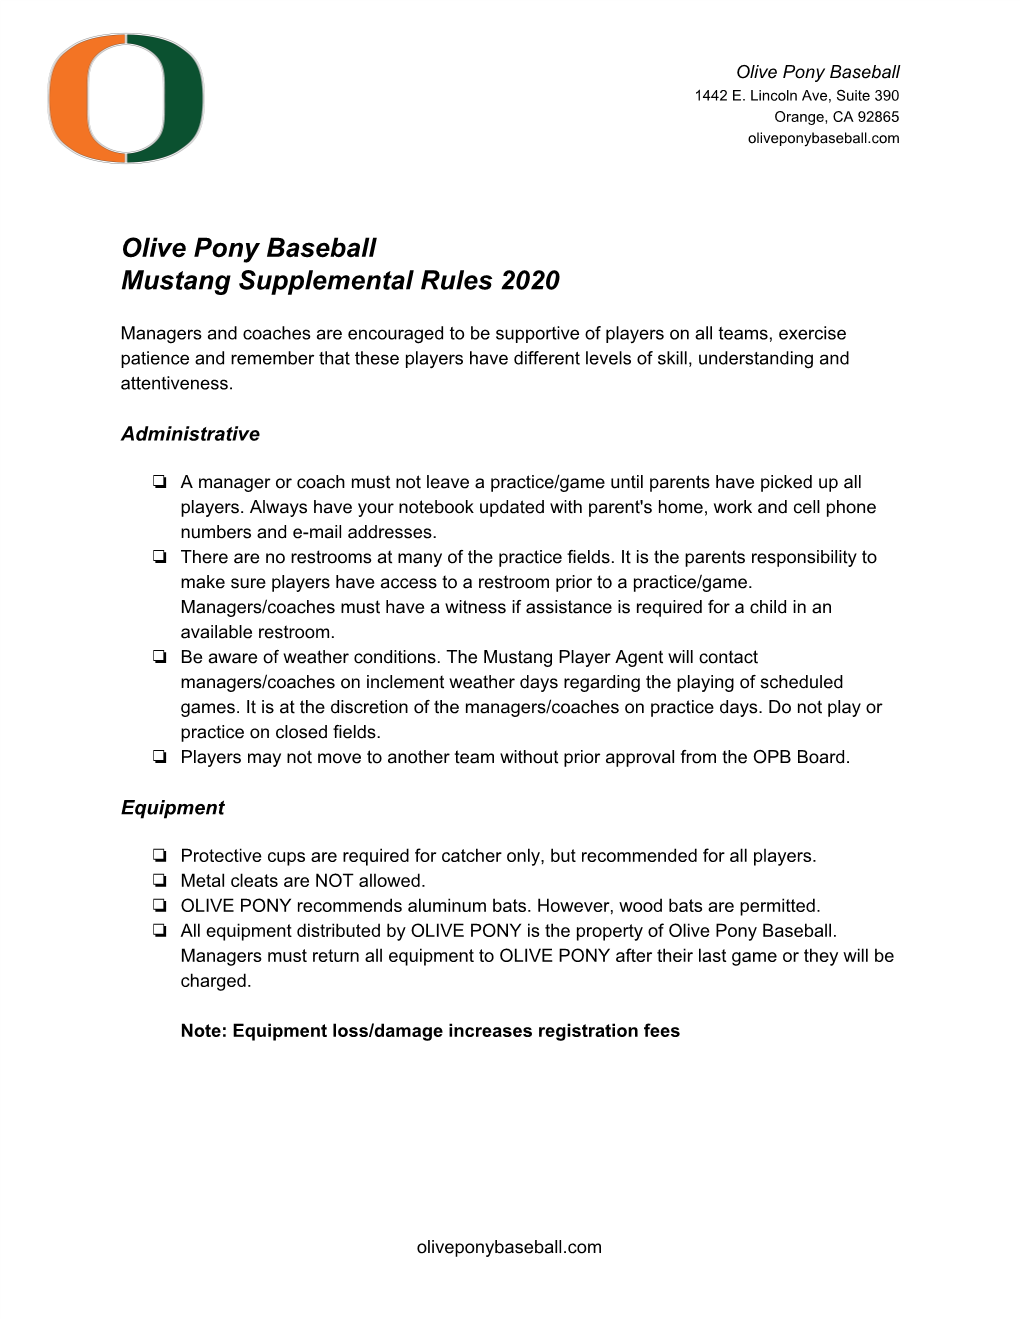 Olive Pony Baseball Mustang Supplemental Rules 2020